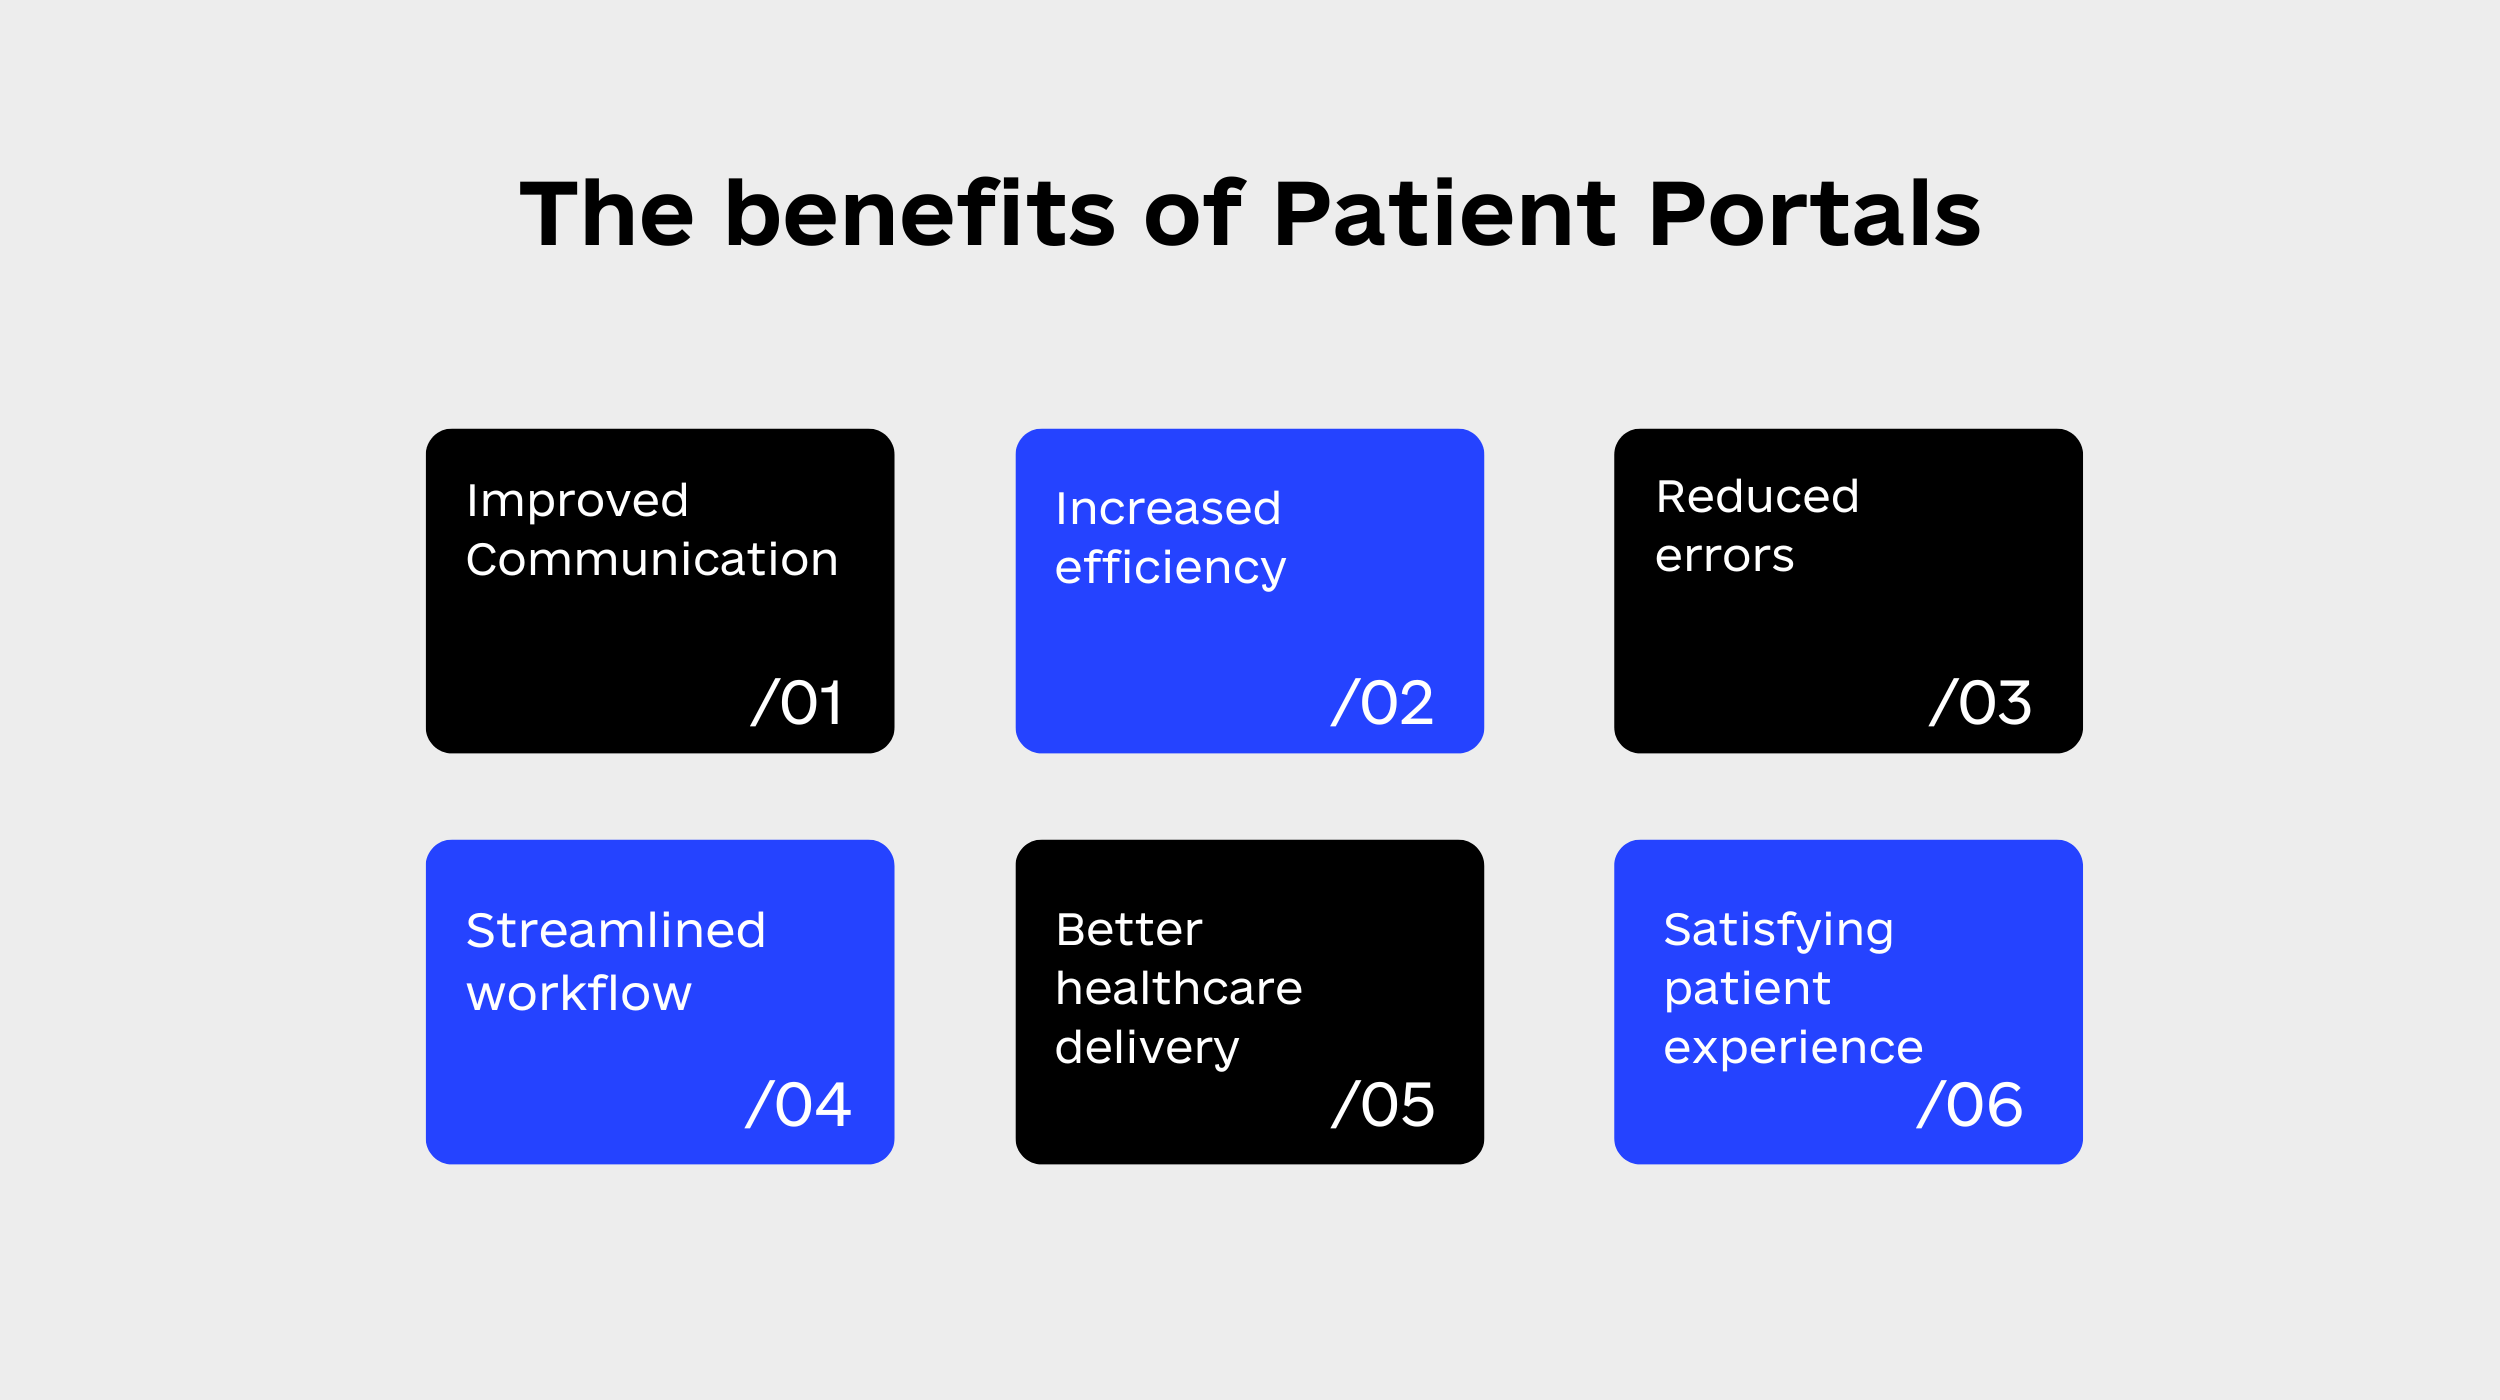 The benefits of Patient Portals